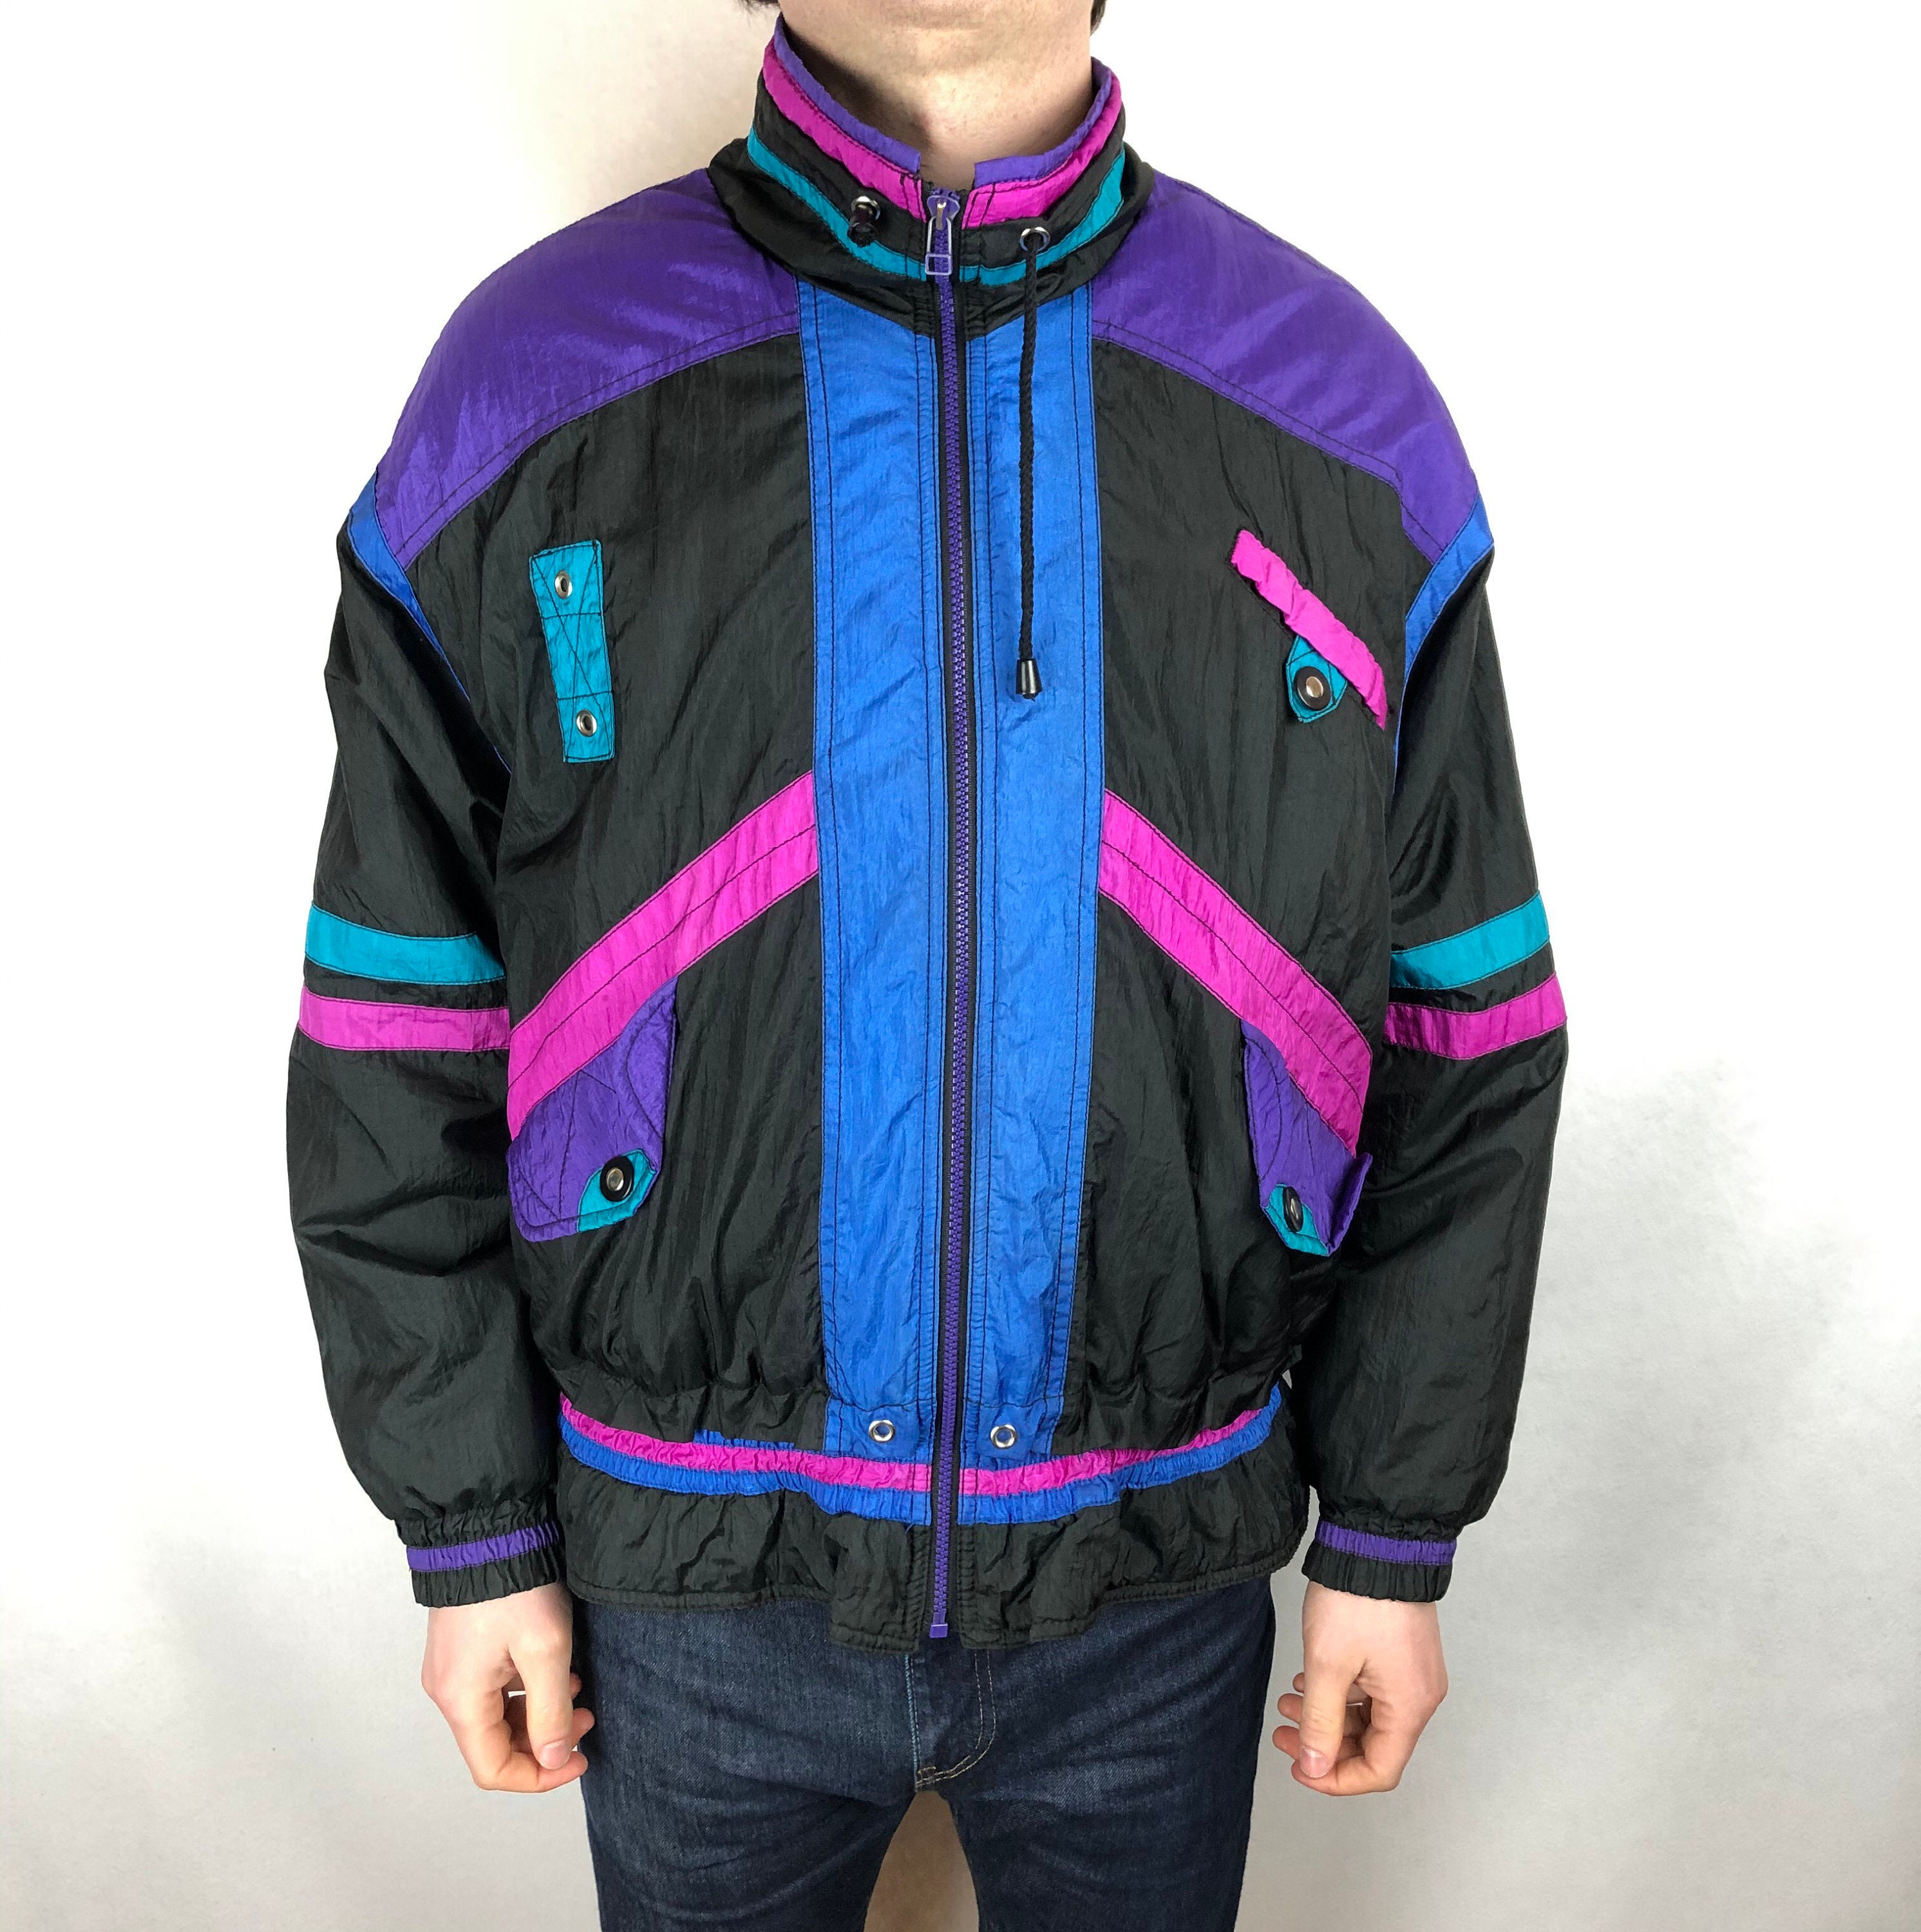 Teal vintage ski jacket Winter bomber jacket Medium size Vintage windbreaker 80s & 90s snow jacket Retro ski suit Sport jacket